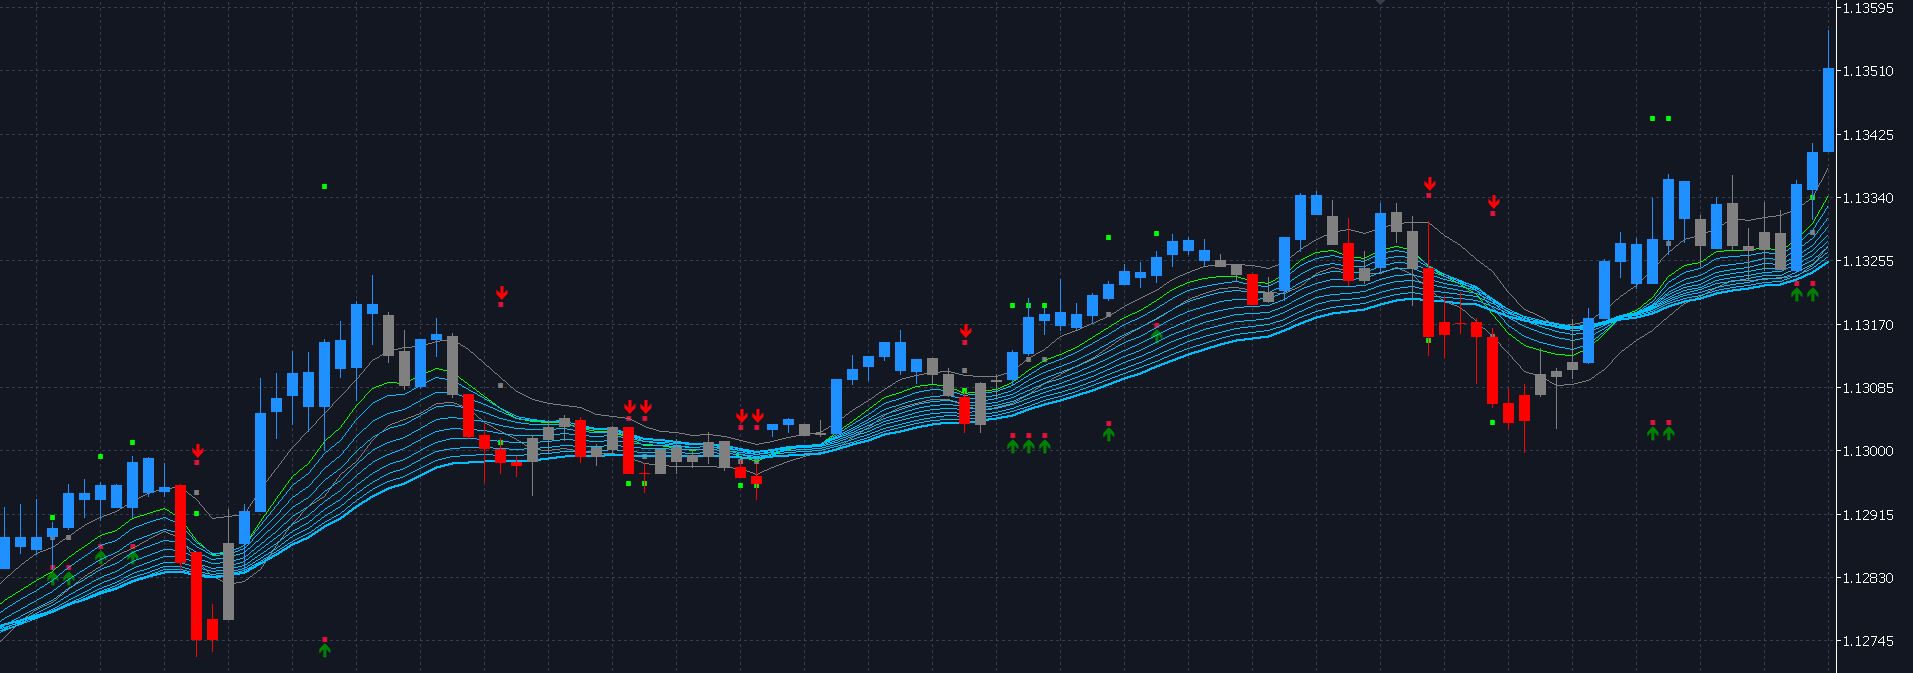 Price Breakout Trading Indicator MetaTrader Ultimate Breakout